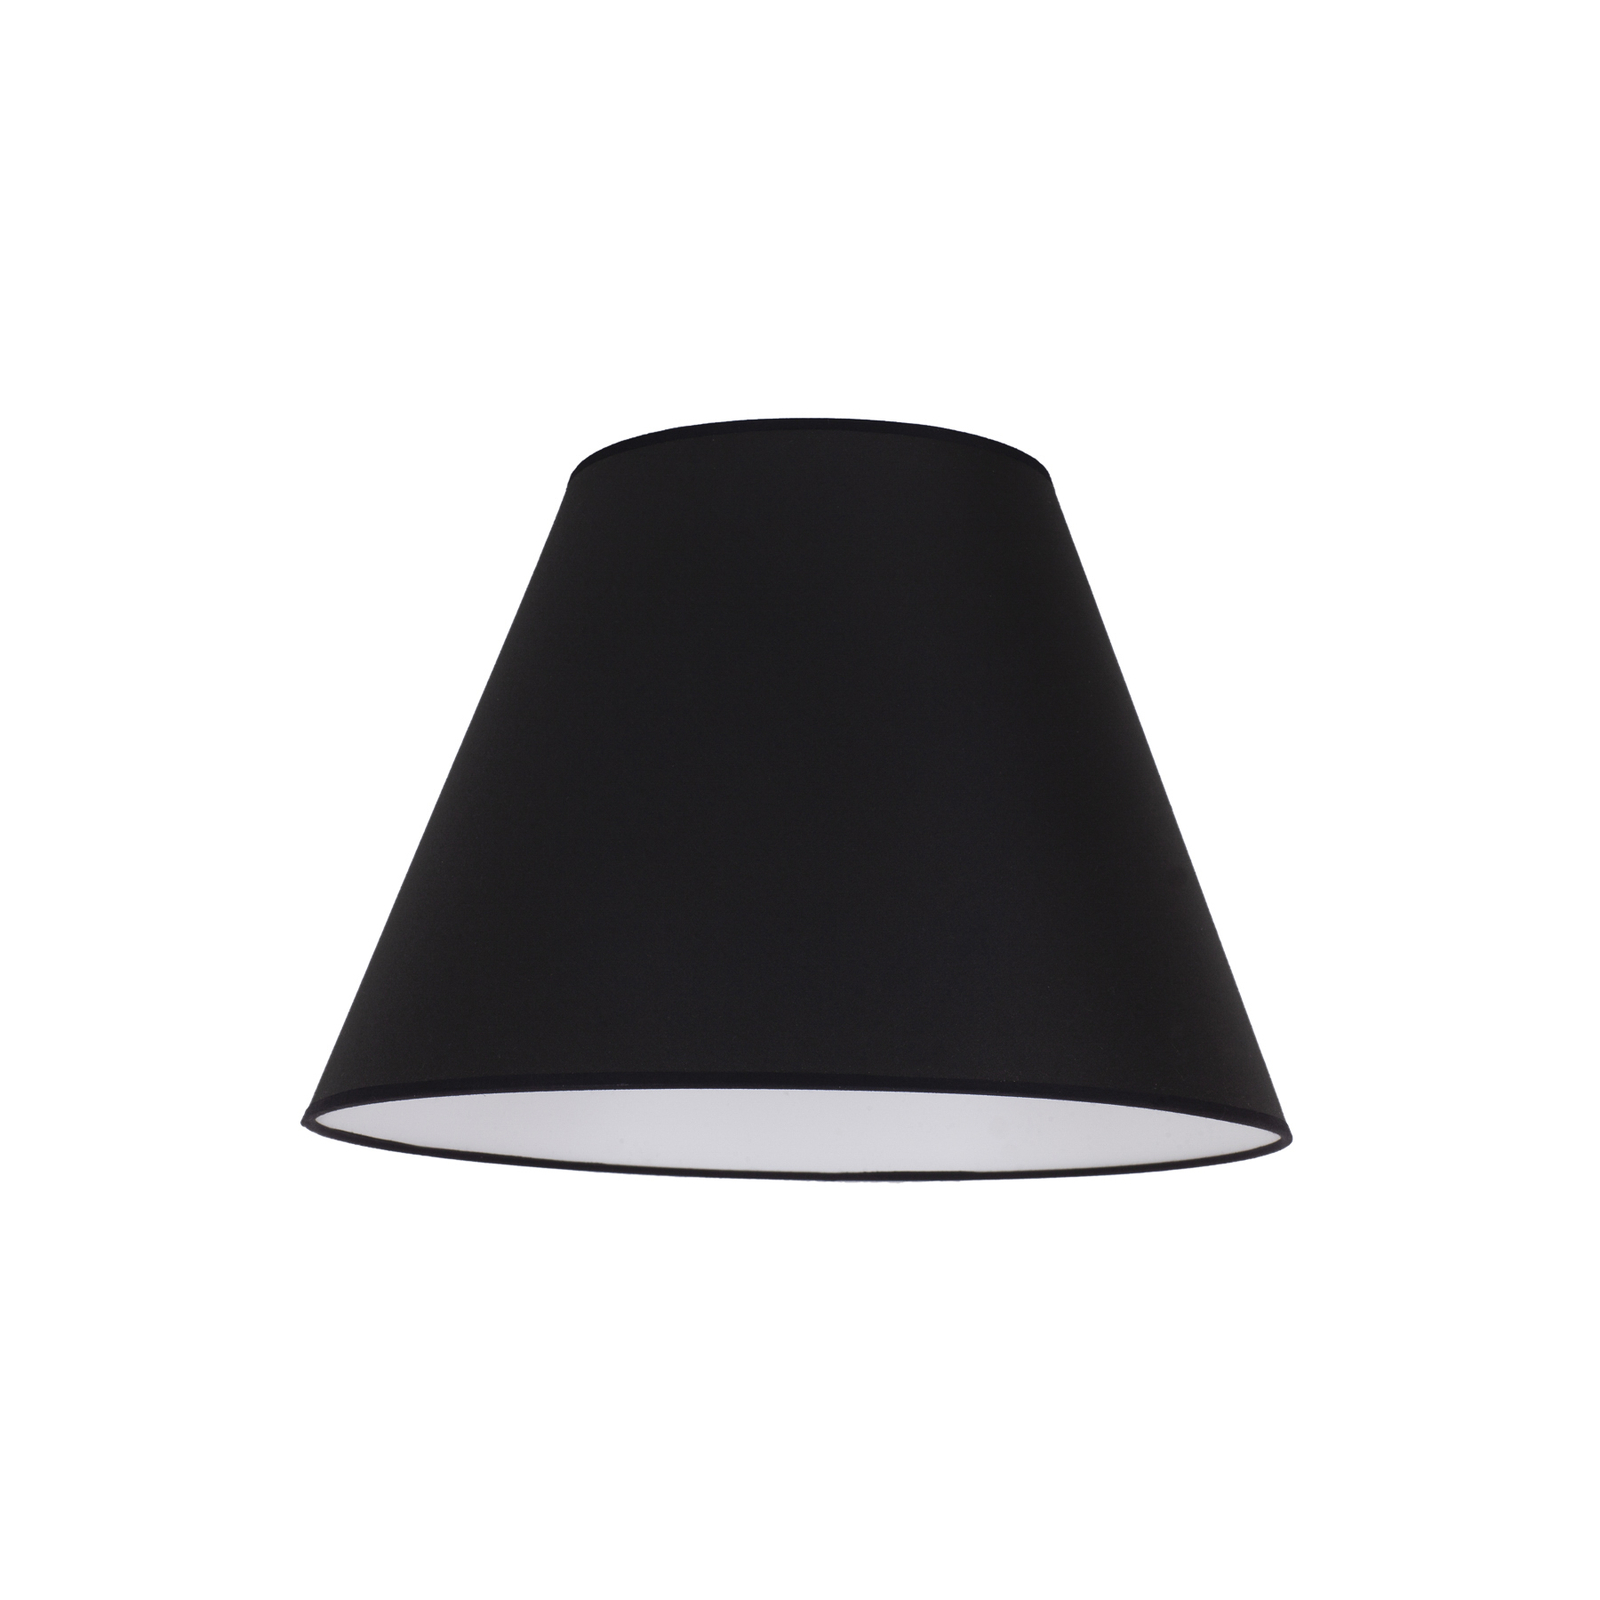 Sofia lampshade height 26 cm, black/white